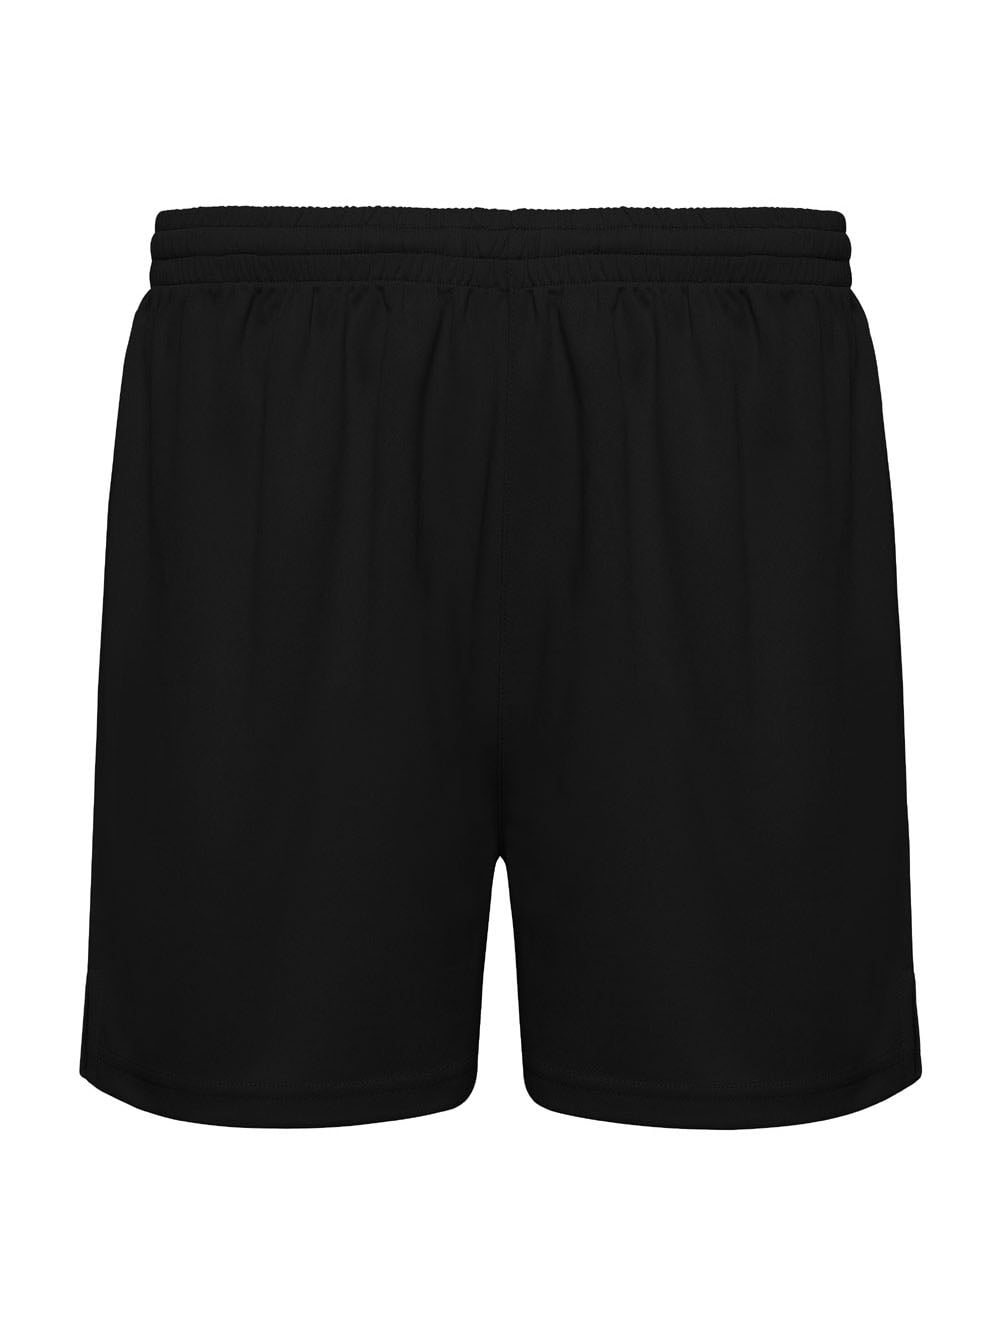 Men's Light Weight Sport Shorts - Adjustable Draw Cord - NO Mesh Liner ...